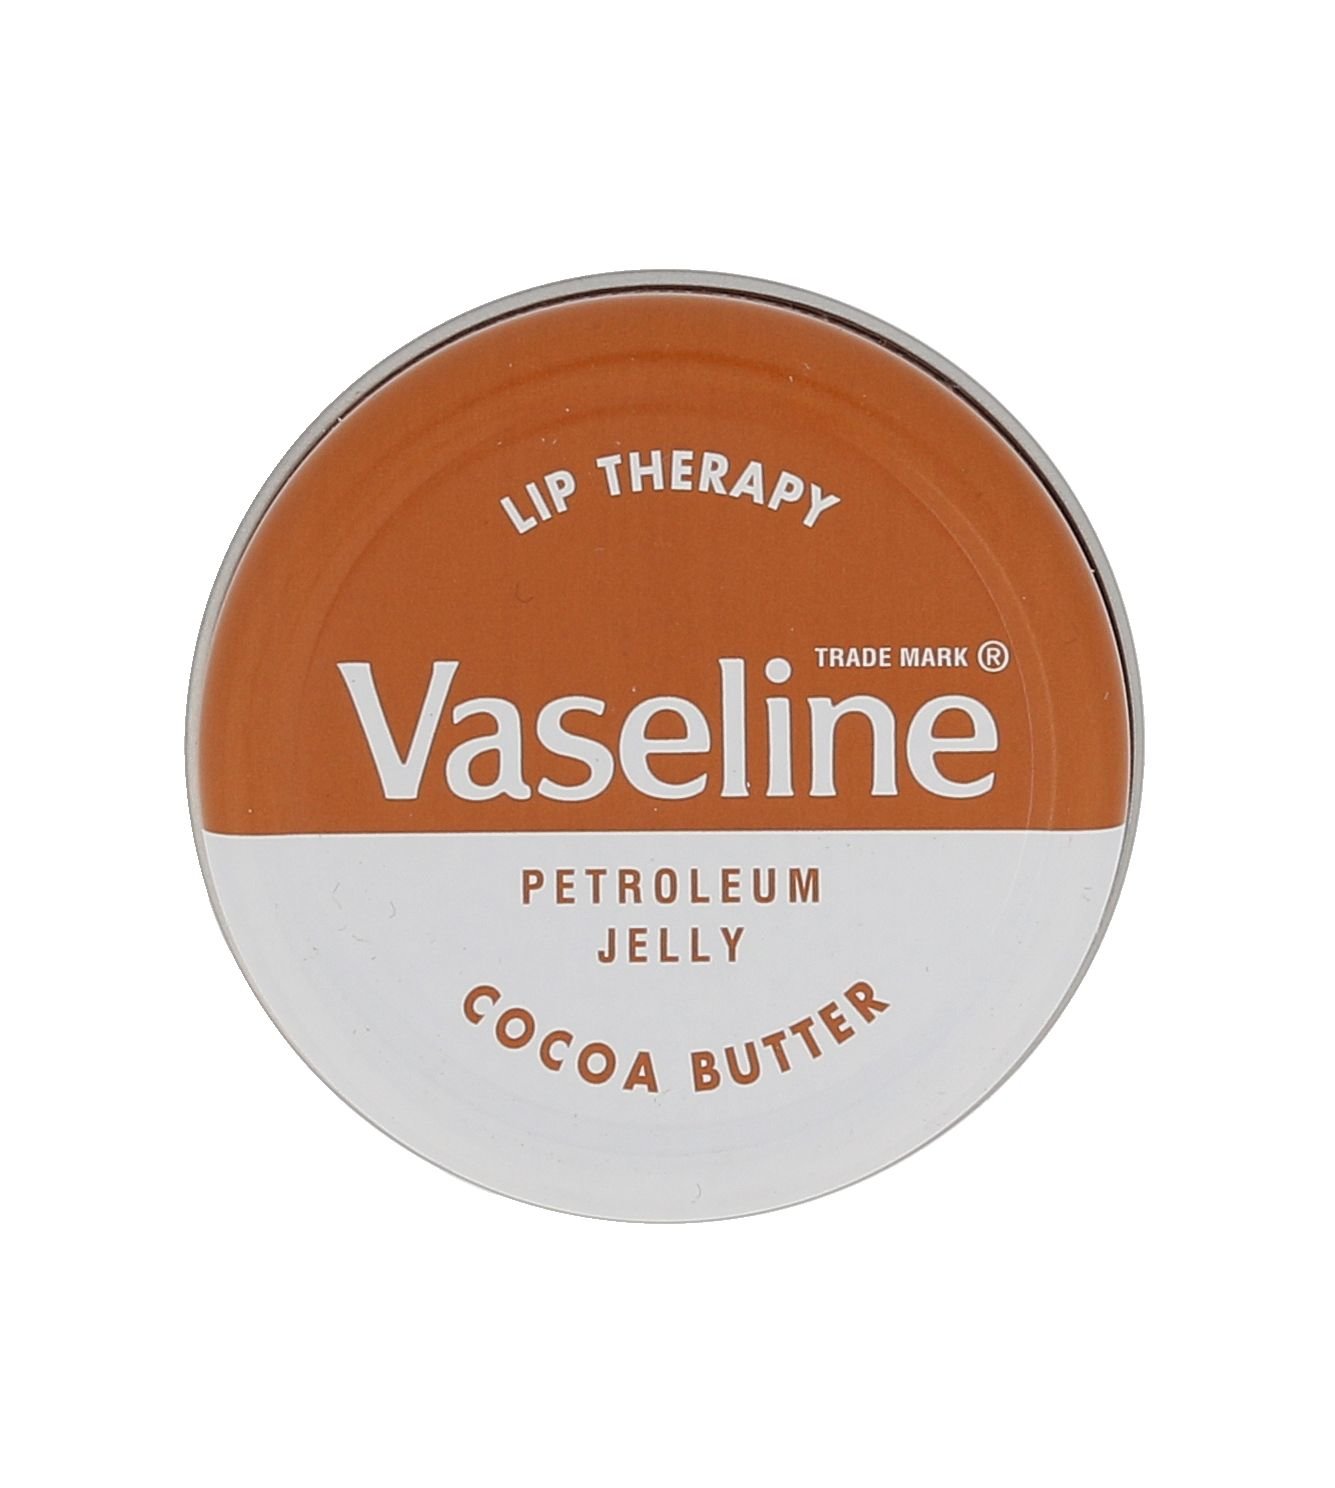 Vaseline Lip Therapy Cocoa Butter lūpų balzamas